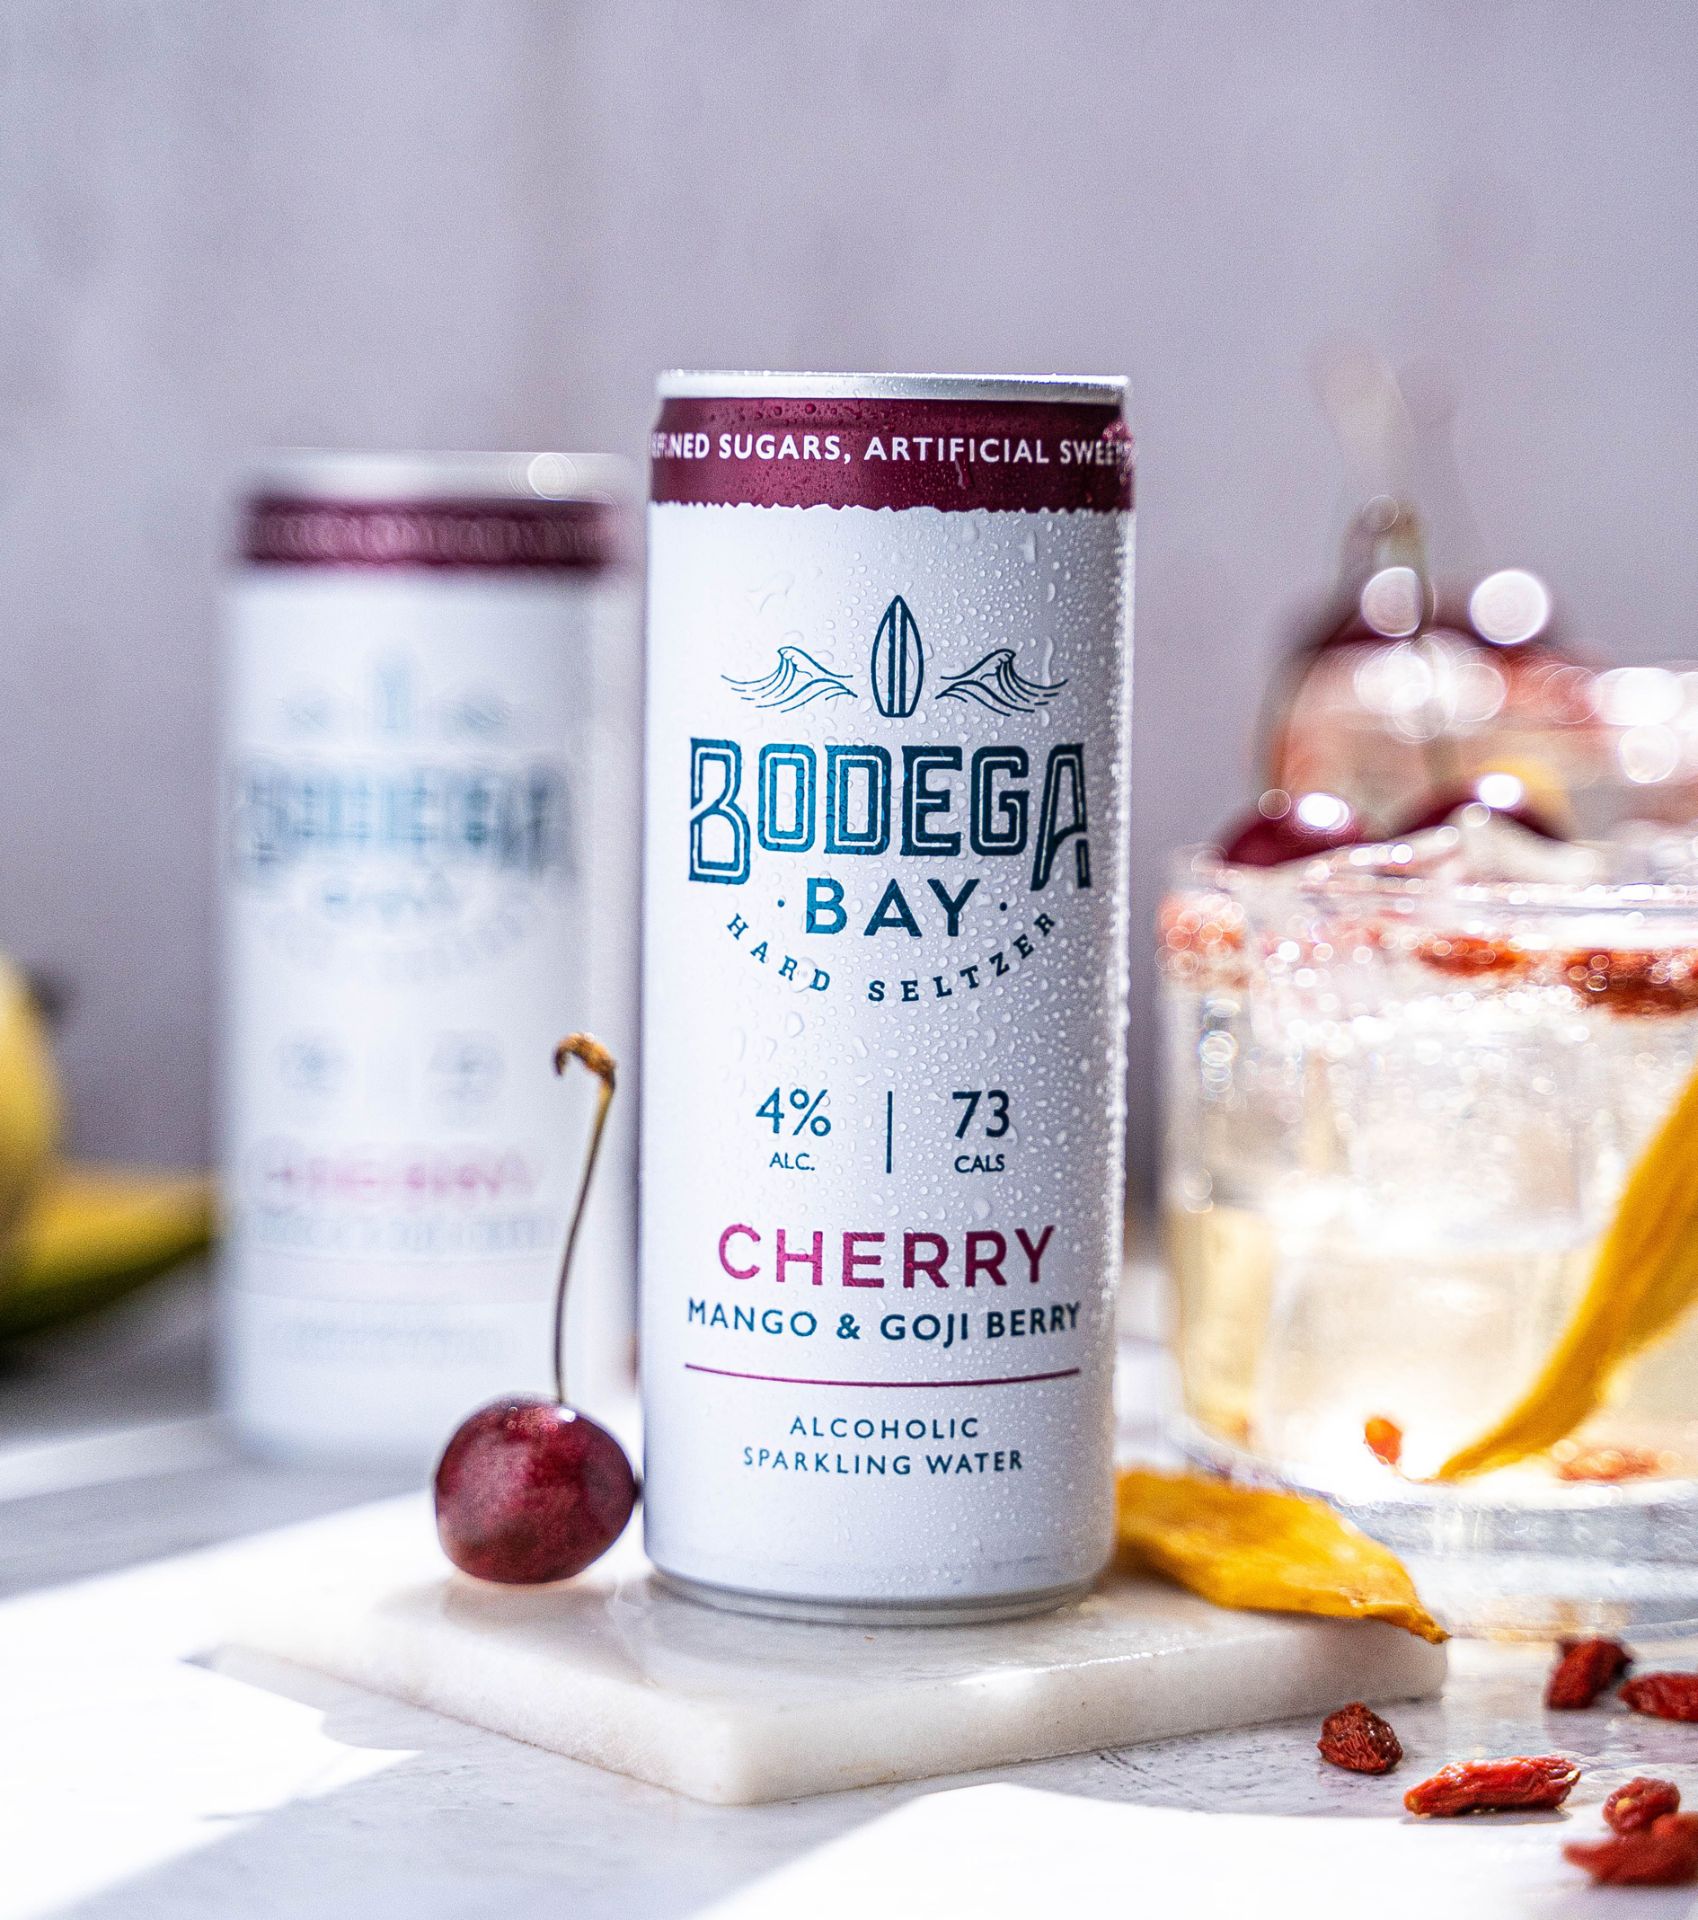 24 x Bodega Bay Hard Seltzer 250ml Alcoholic Sparkling Water Drinks - Cherry Mango & Goji Berry - 4% - Image 6 of 8